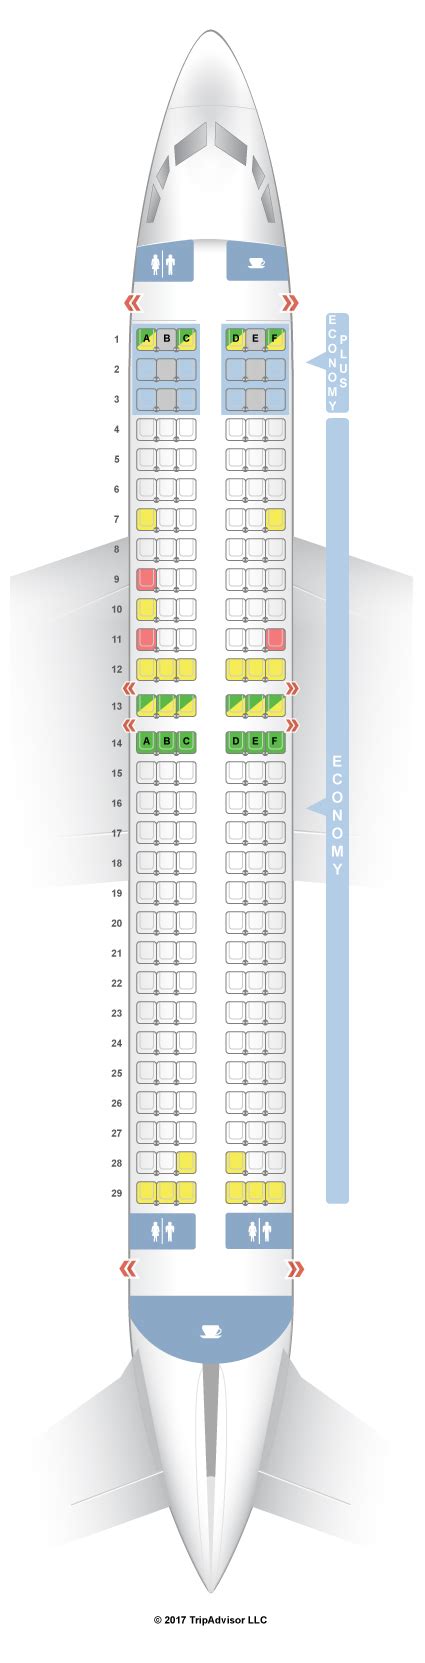 boeing 737-800 seat map westjet